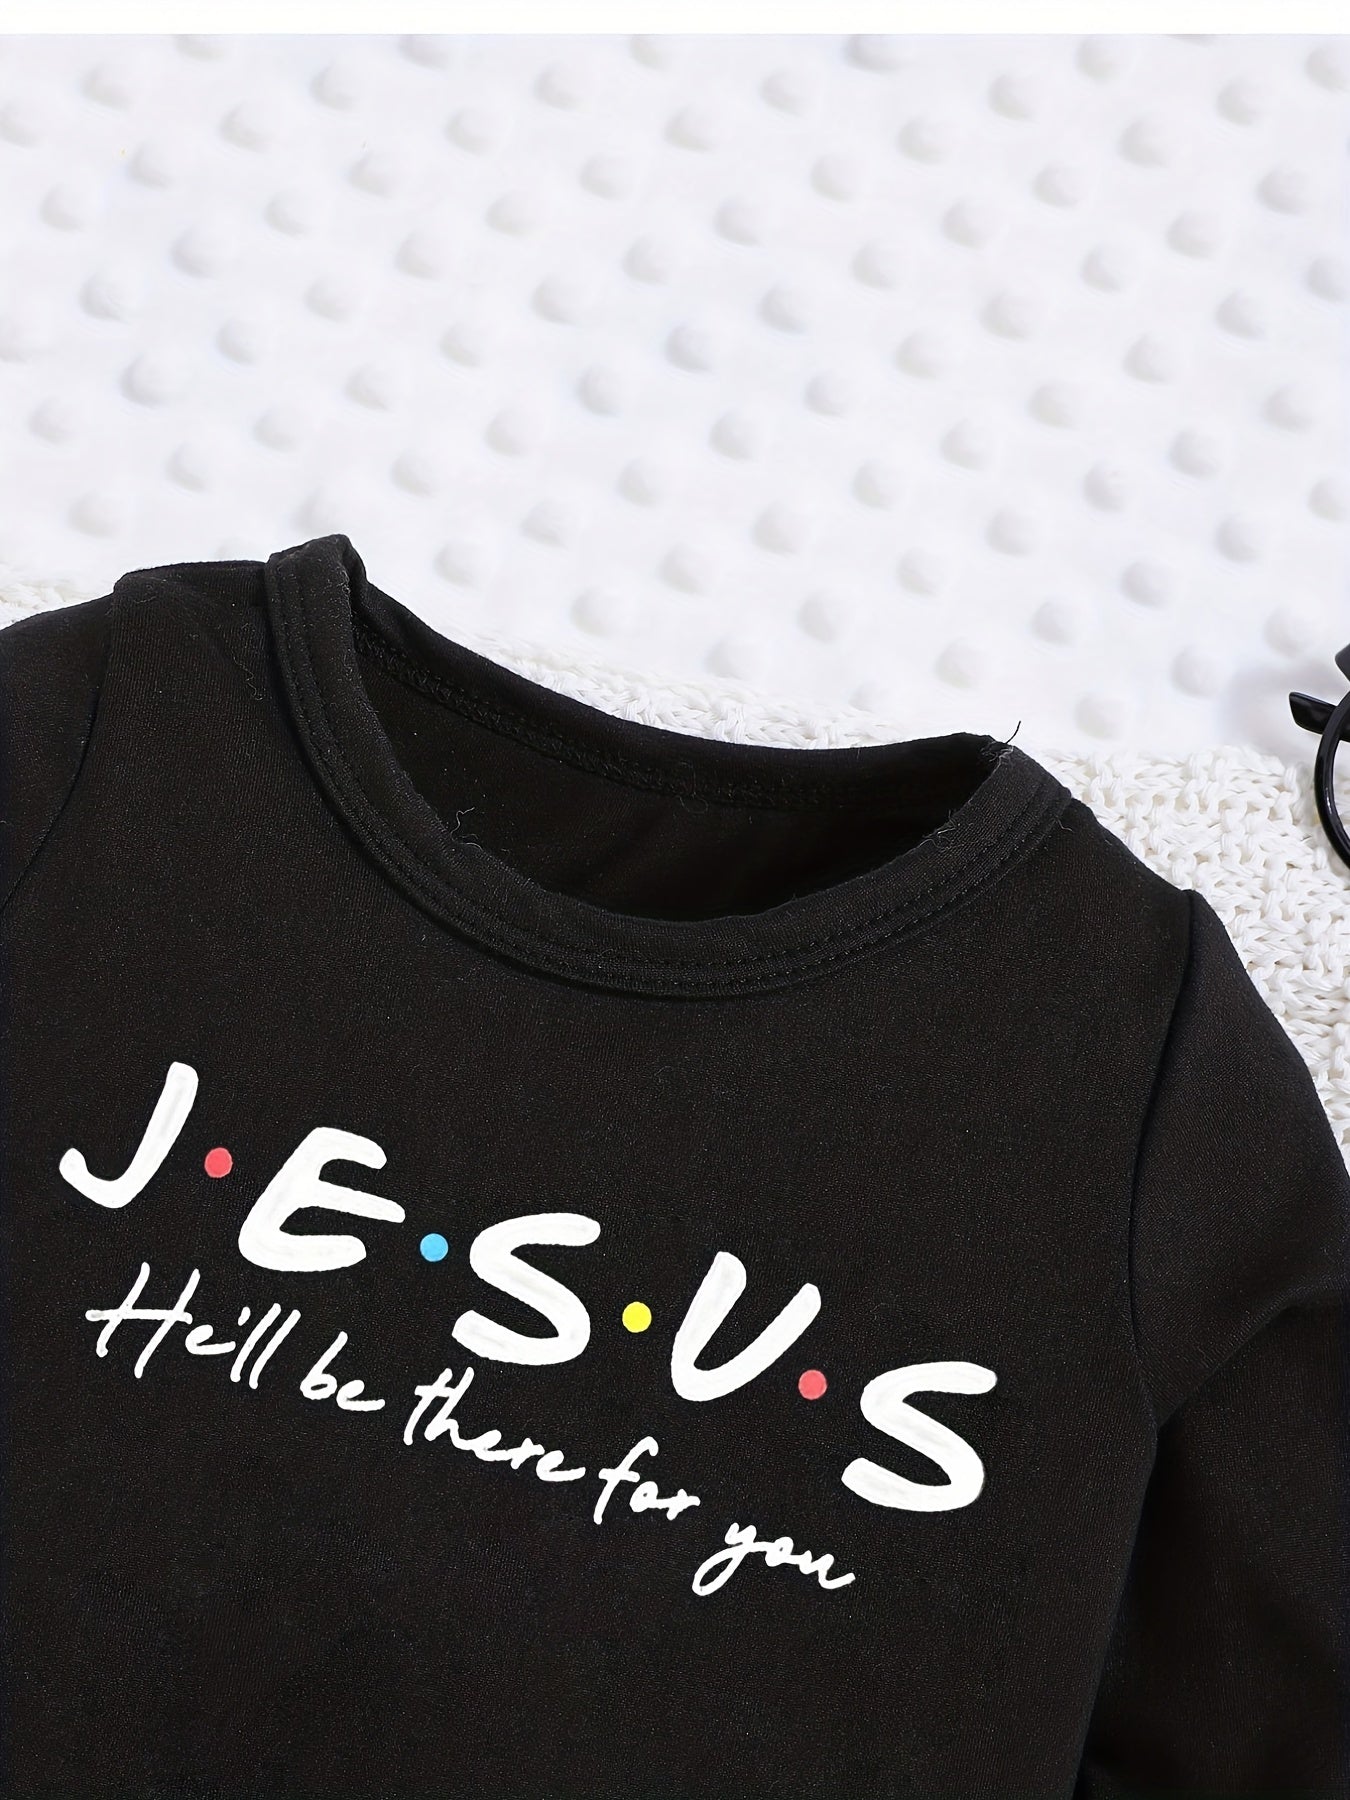 JESUS HE'LL BE HERE FOR YOU Long Sleeve Christian Baby Onesie claimedbygoddesigns